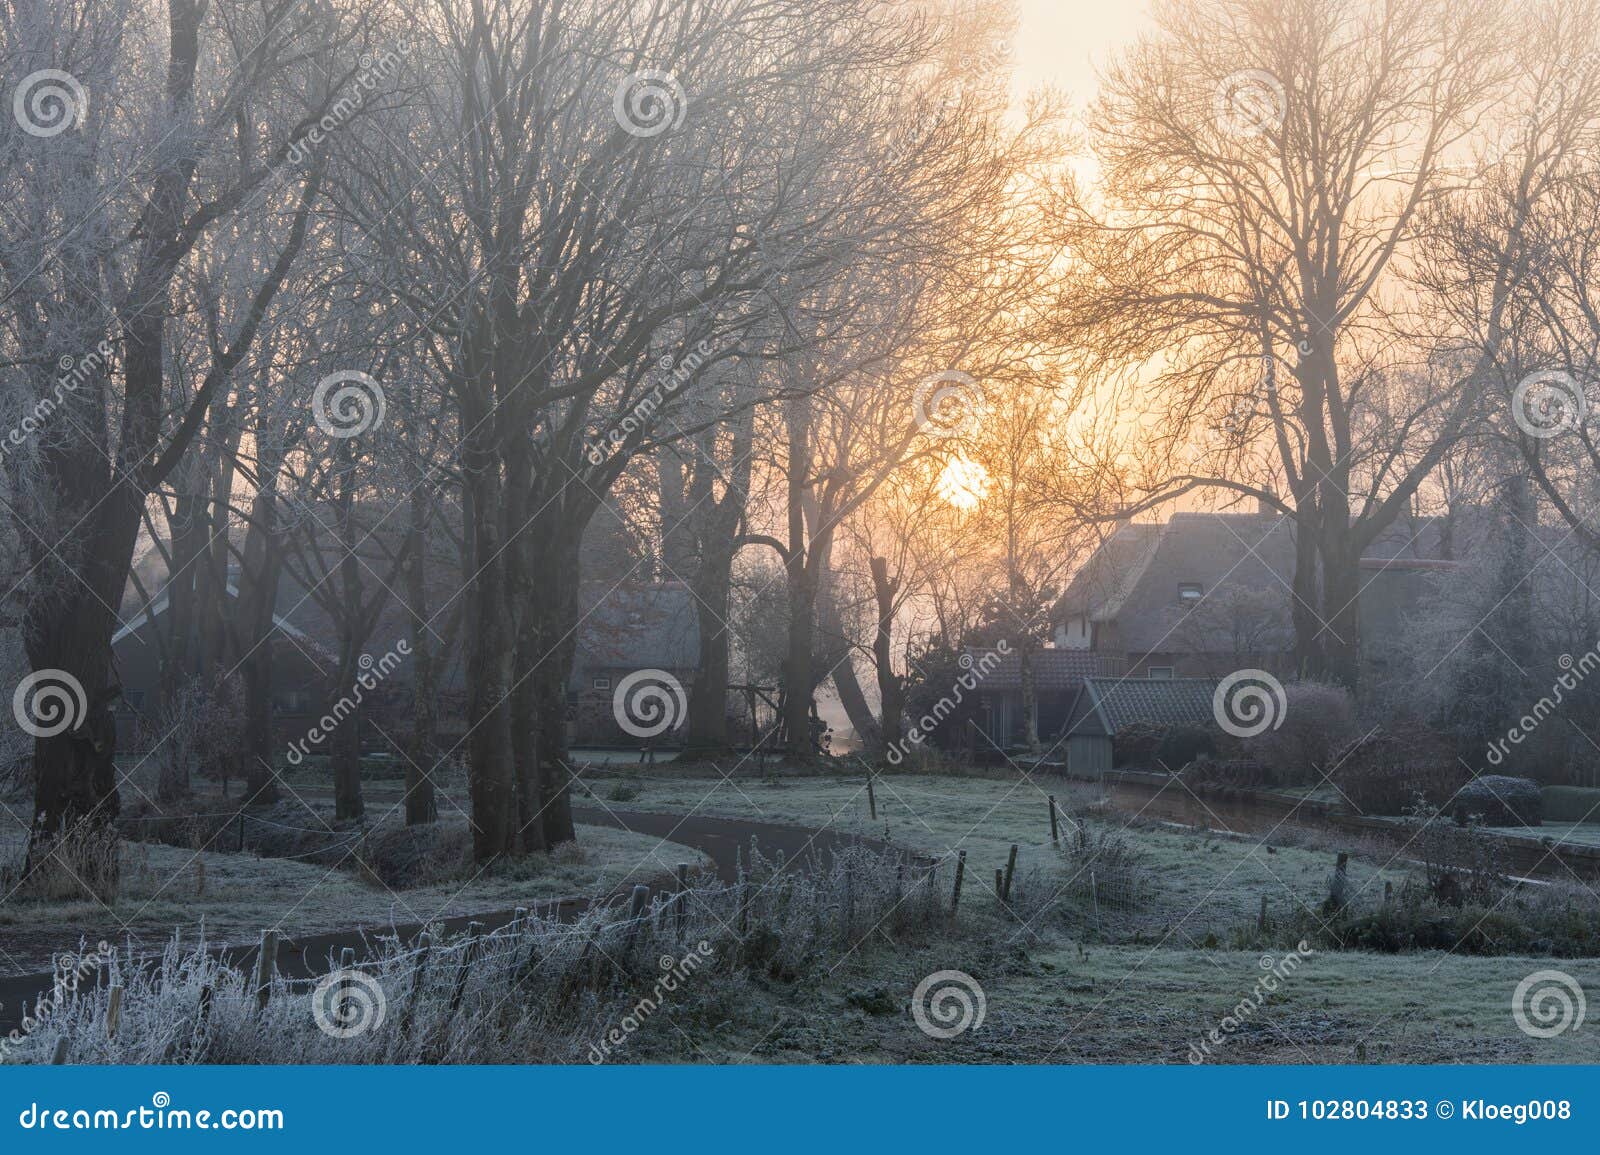 winter morning in nederland